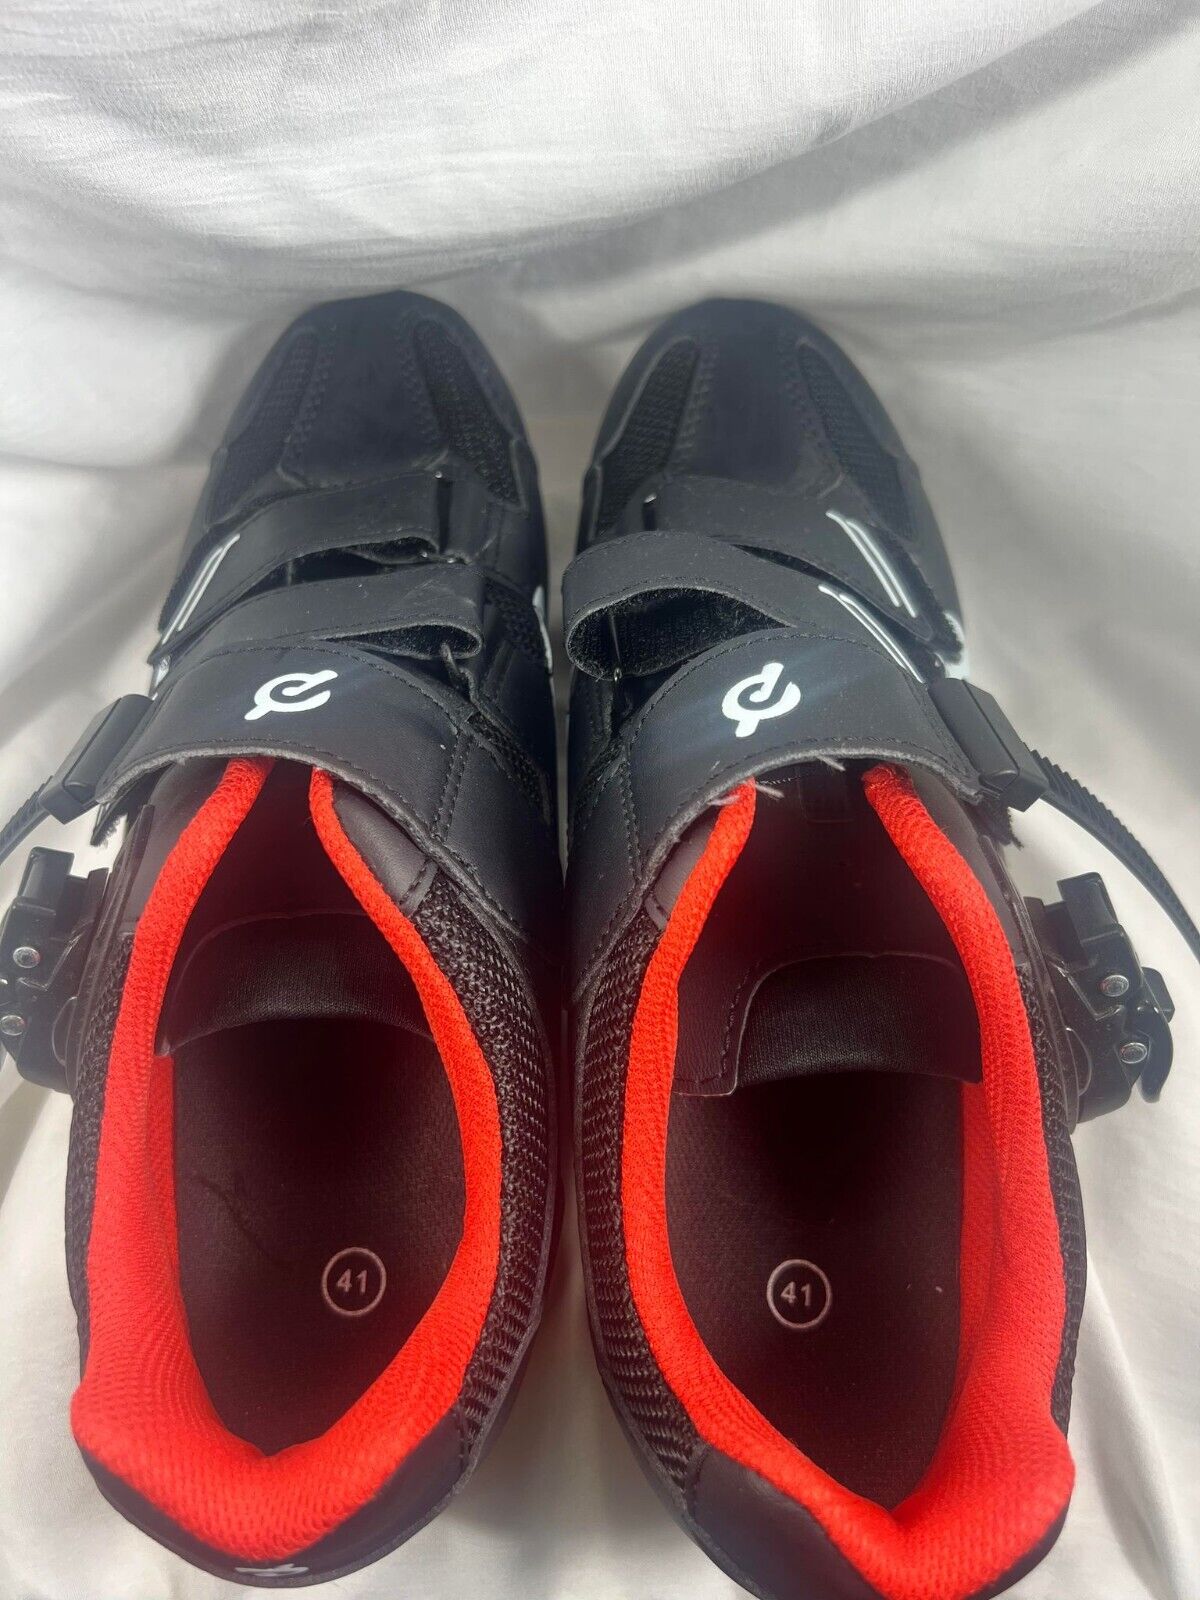 Peloton Cycling Shoes PL-SH-02-40 Black/Red - US Men's 8 / Women's 10/ EU 41